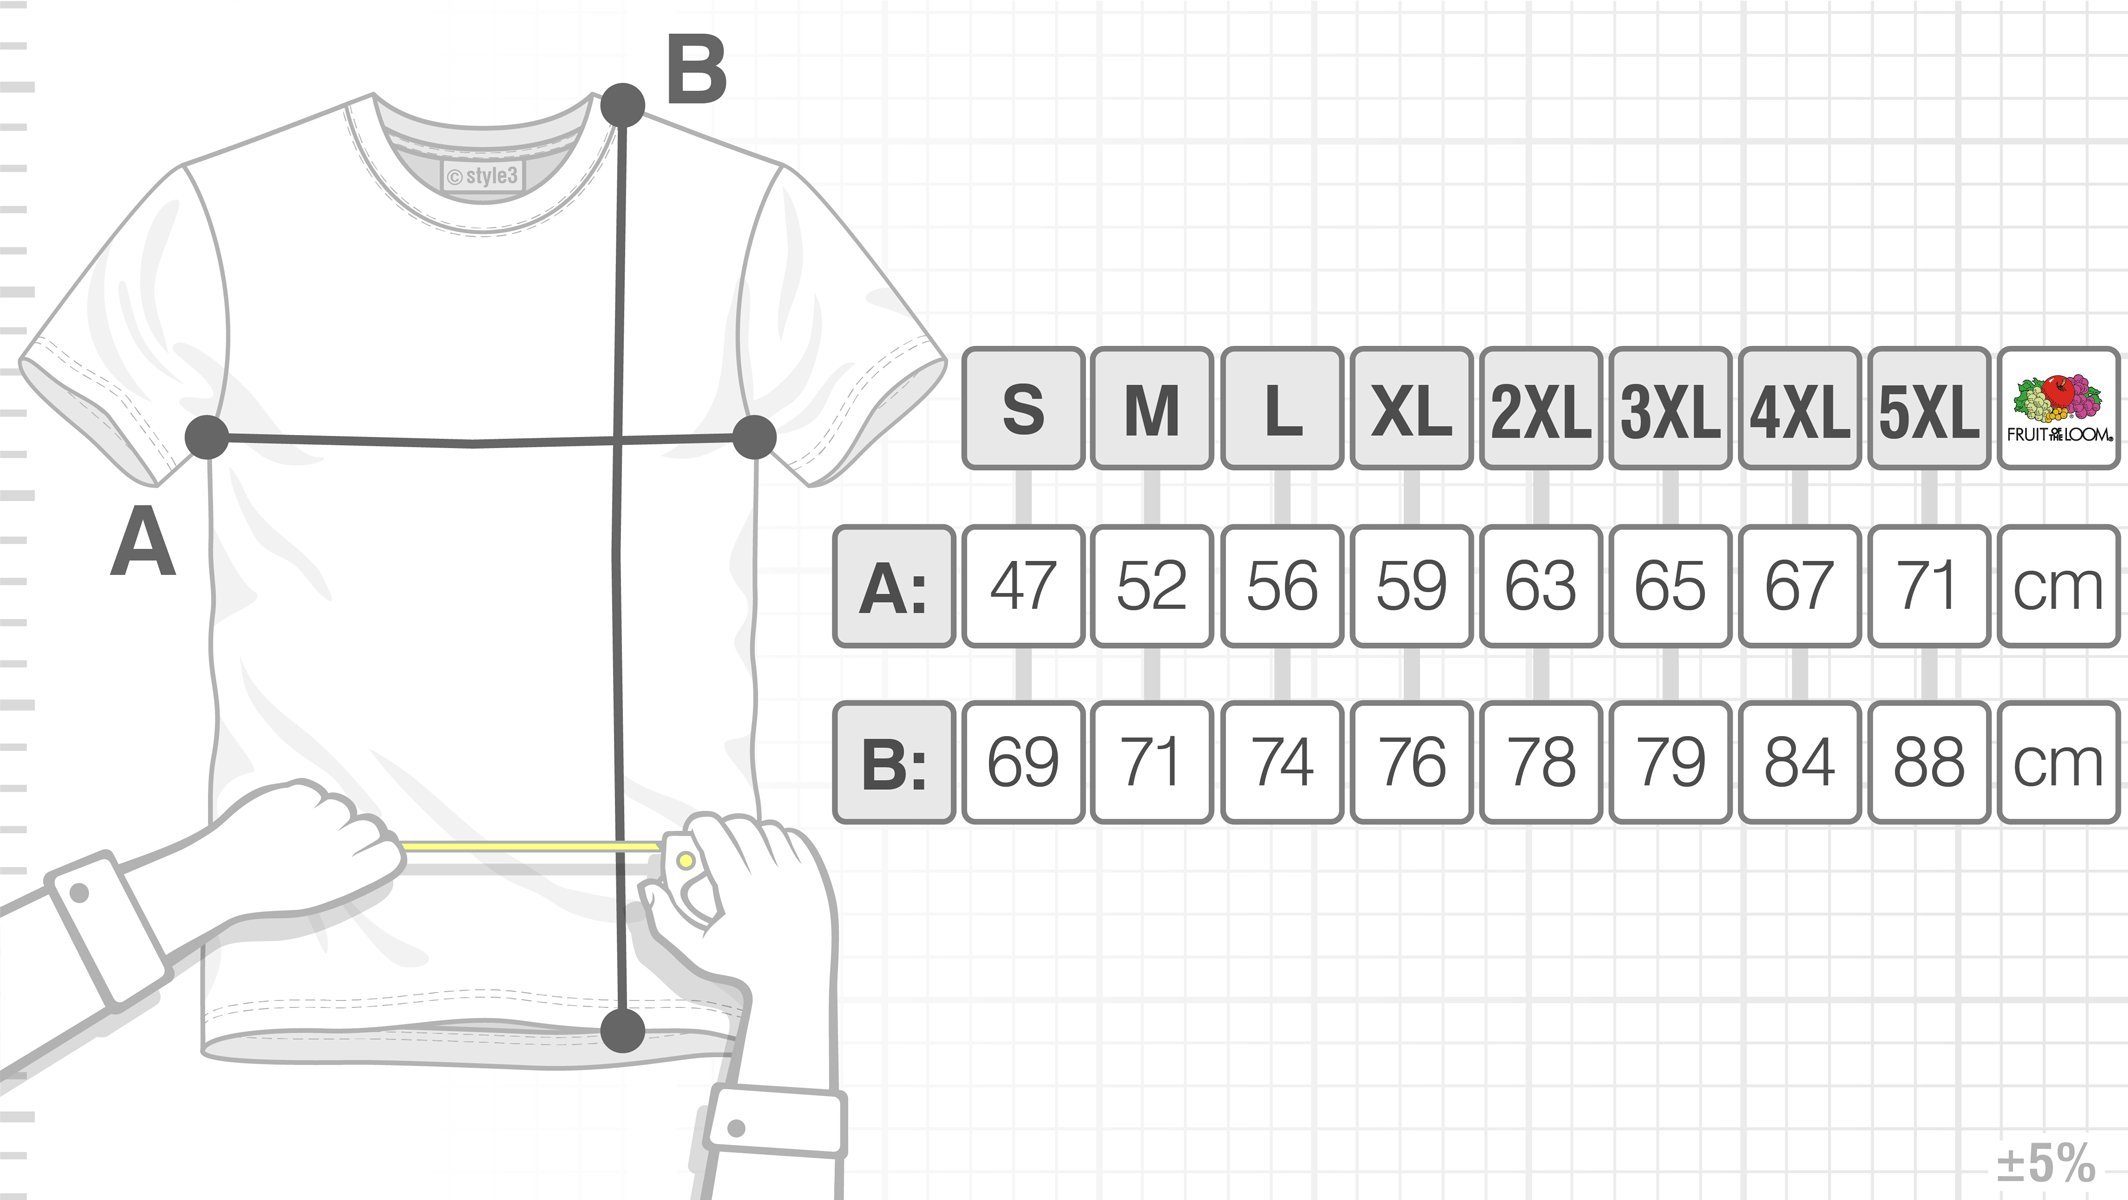 gamer nintendo Virtual 32Bit Herren videospiel n64 T-Shirt nes konsole Print-Shirt super Boy grün style3